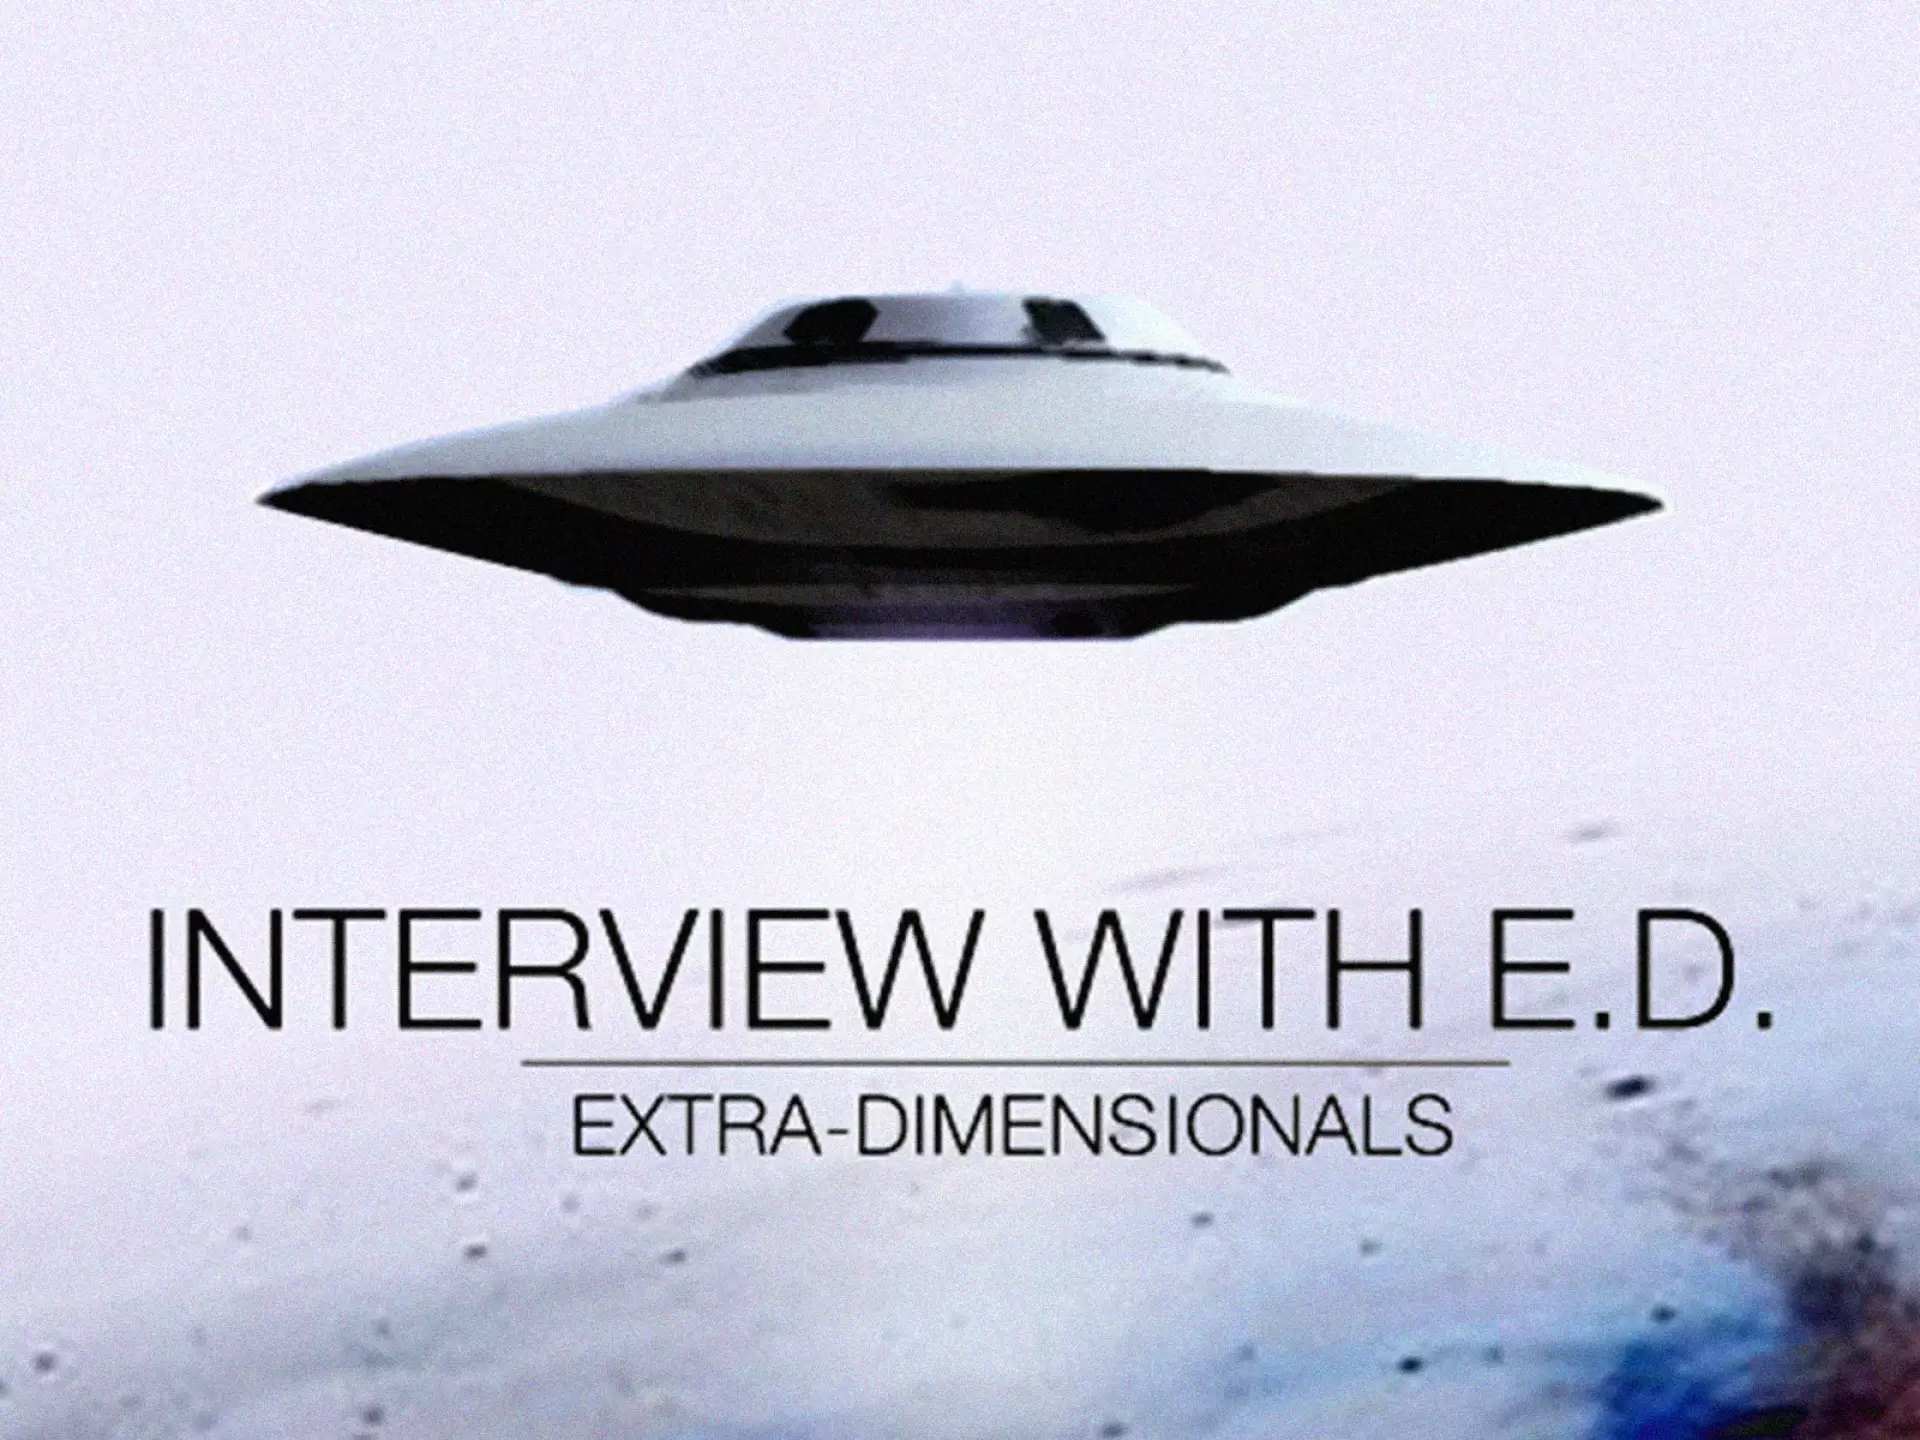 دانلود سریال Interviews with Extra Dimensionals 2015